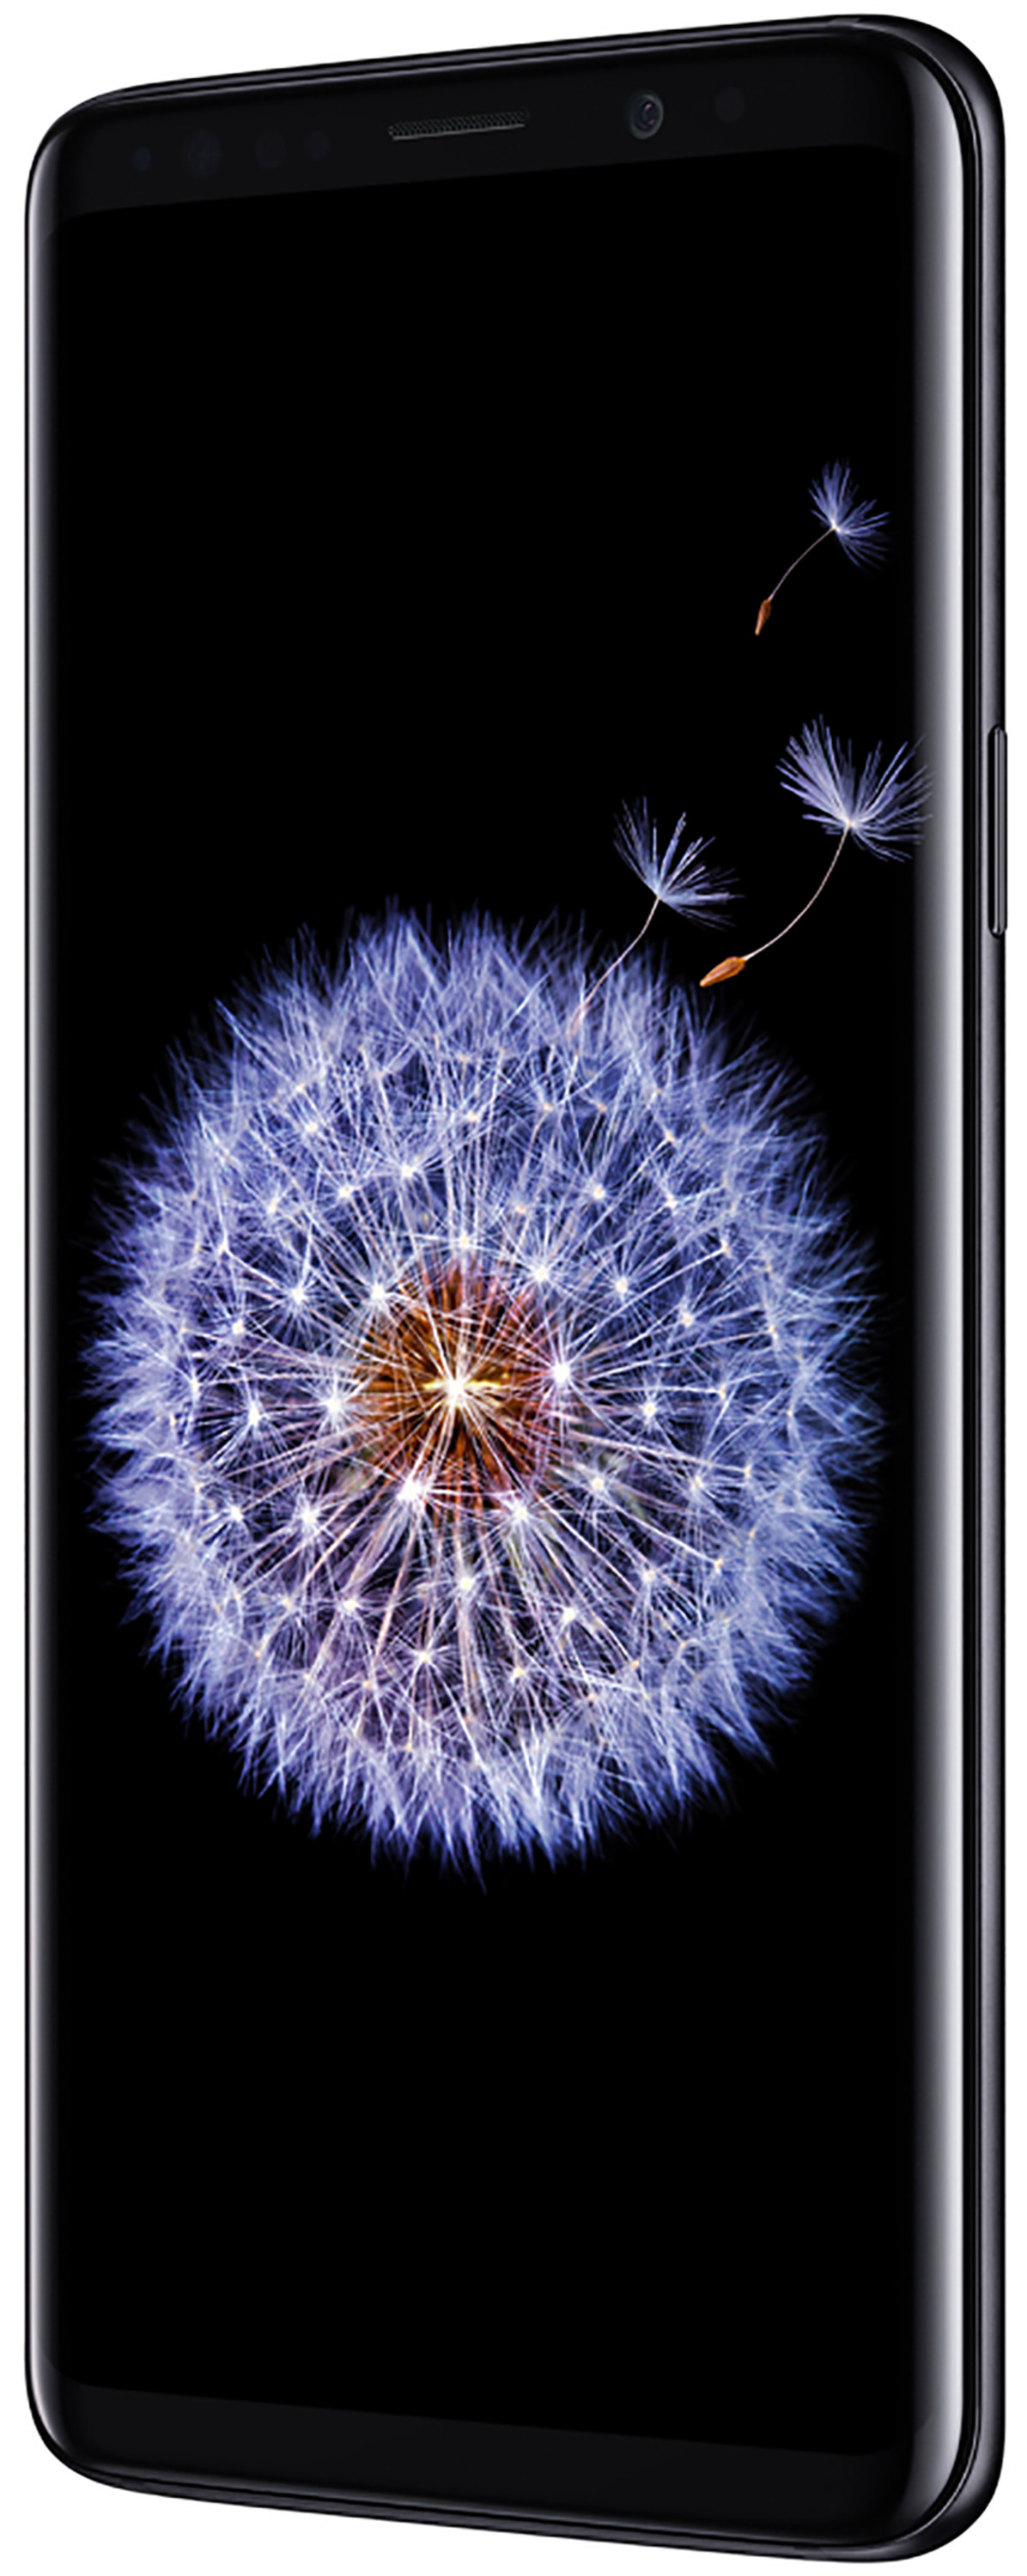 Restored SAMSUNG Galaxy S9 G960U 64GB Unlocked GSM/CDMA 4G LTE Phone with 12MP Camera (USA Version) - Midnight Black (Refurbished) - image 5 of 6